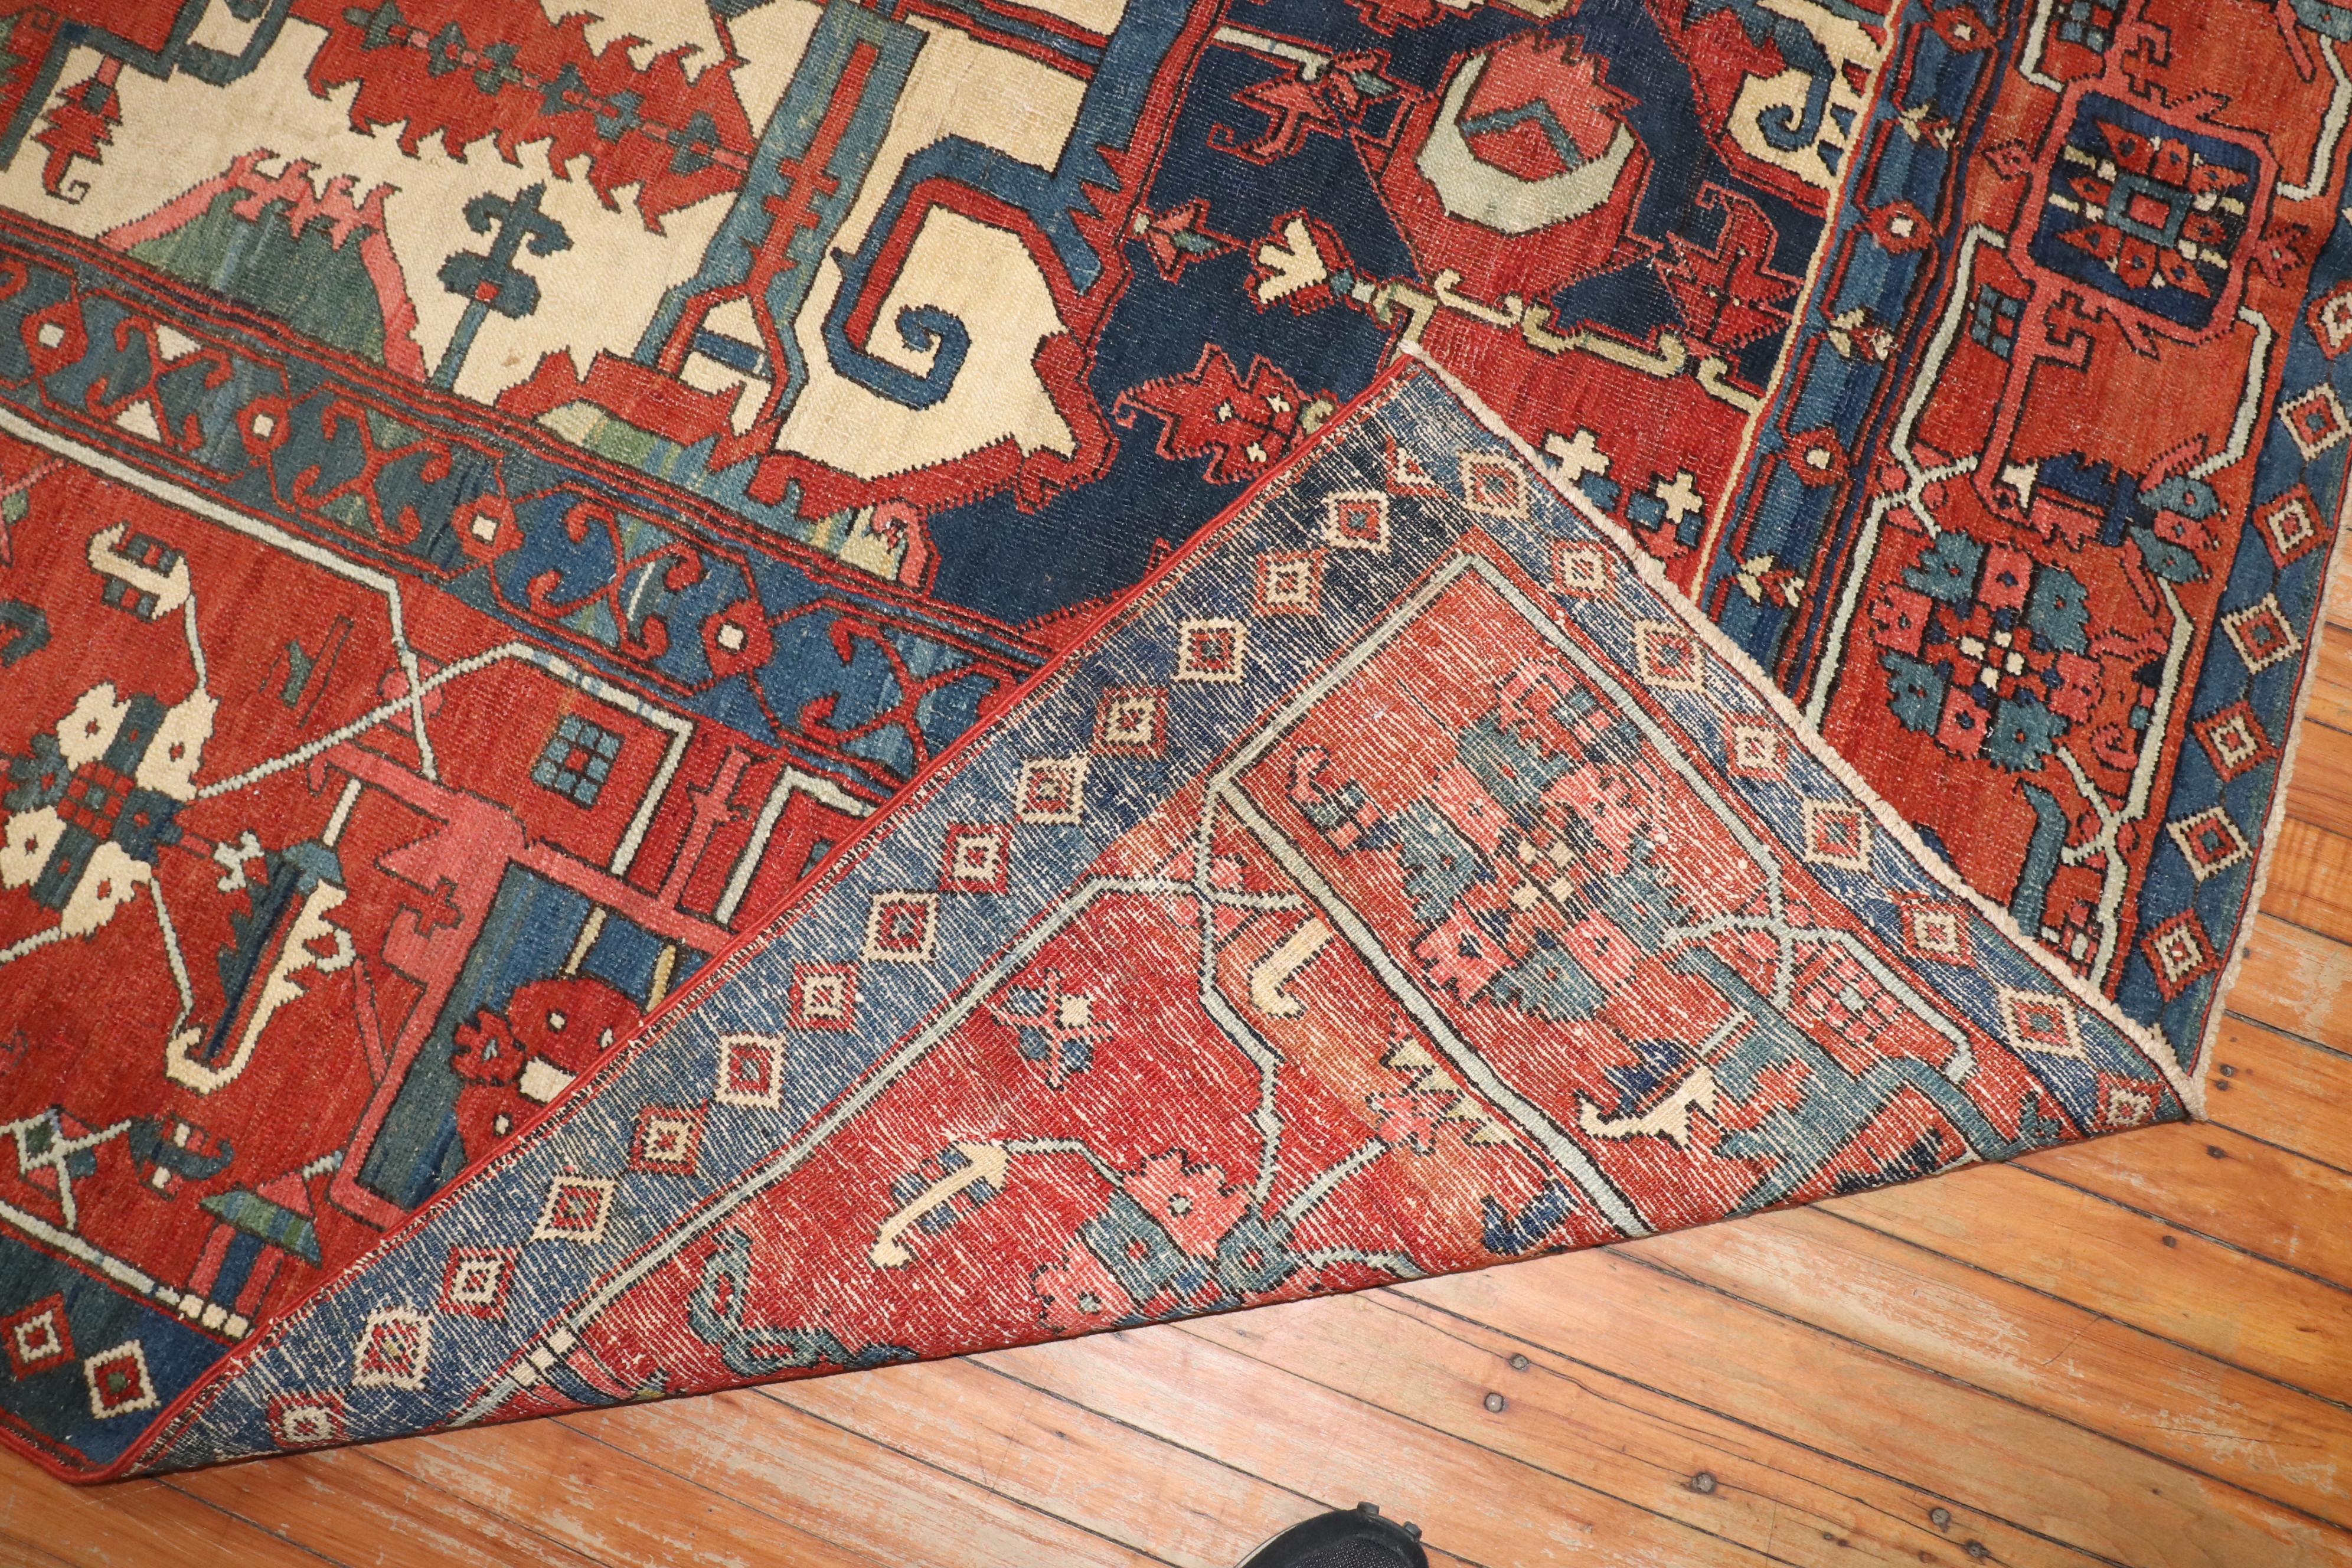 Zabihi Collection Pictorial Animal Figure Antique Persian Serapi Carpet For Sale 1